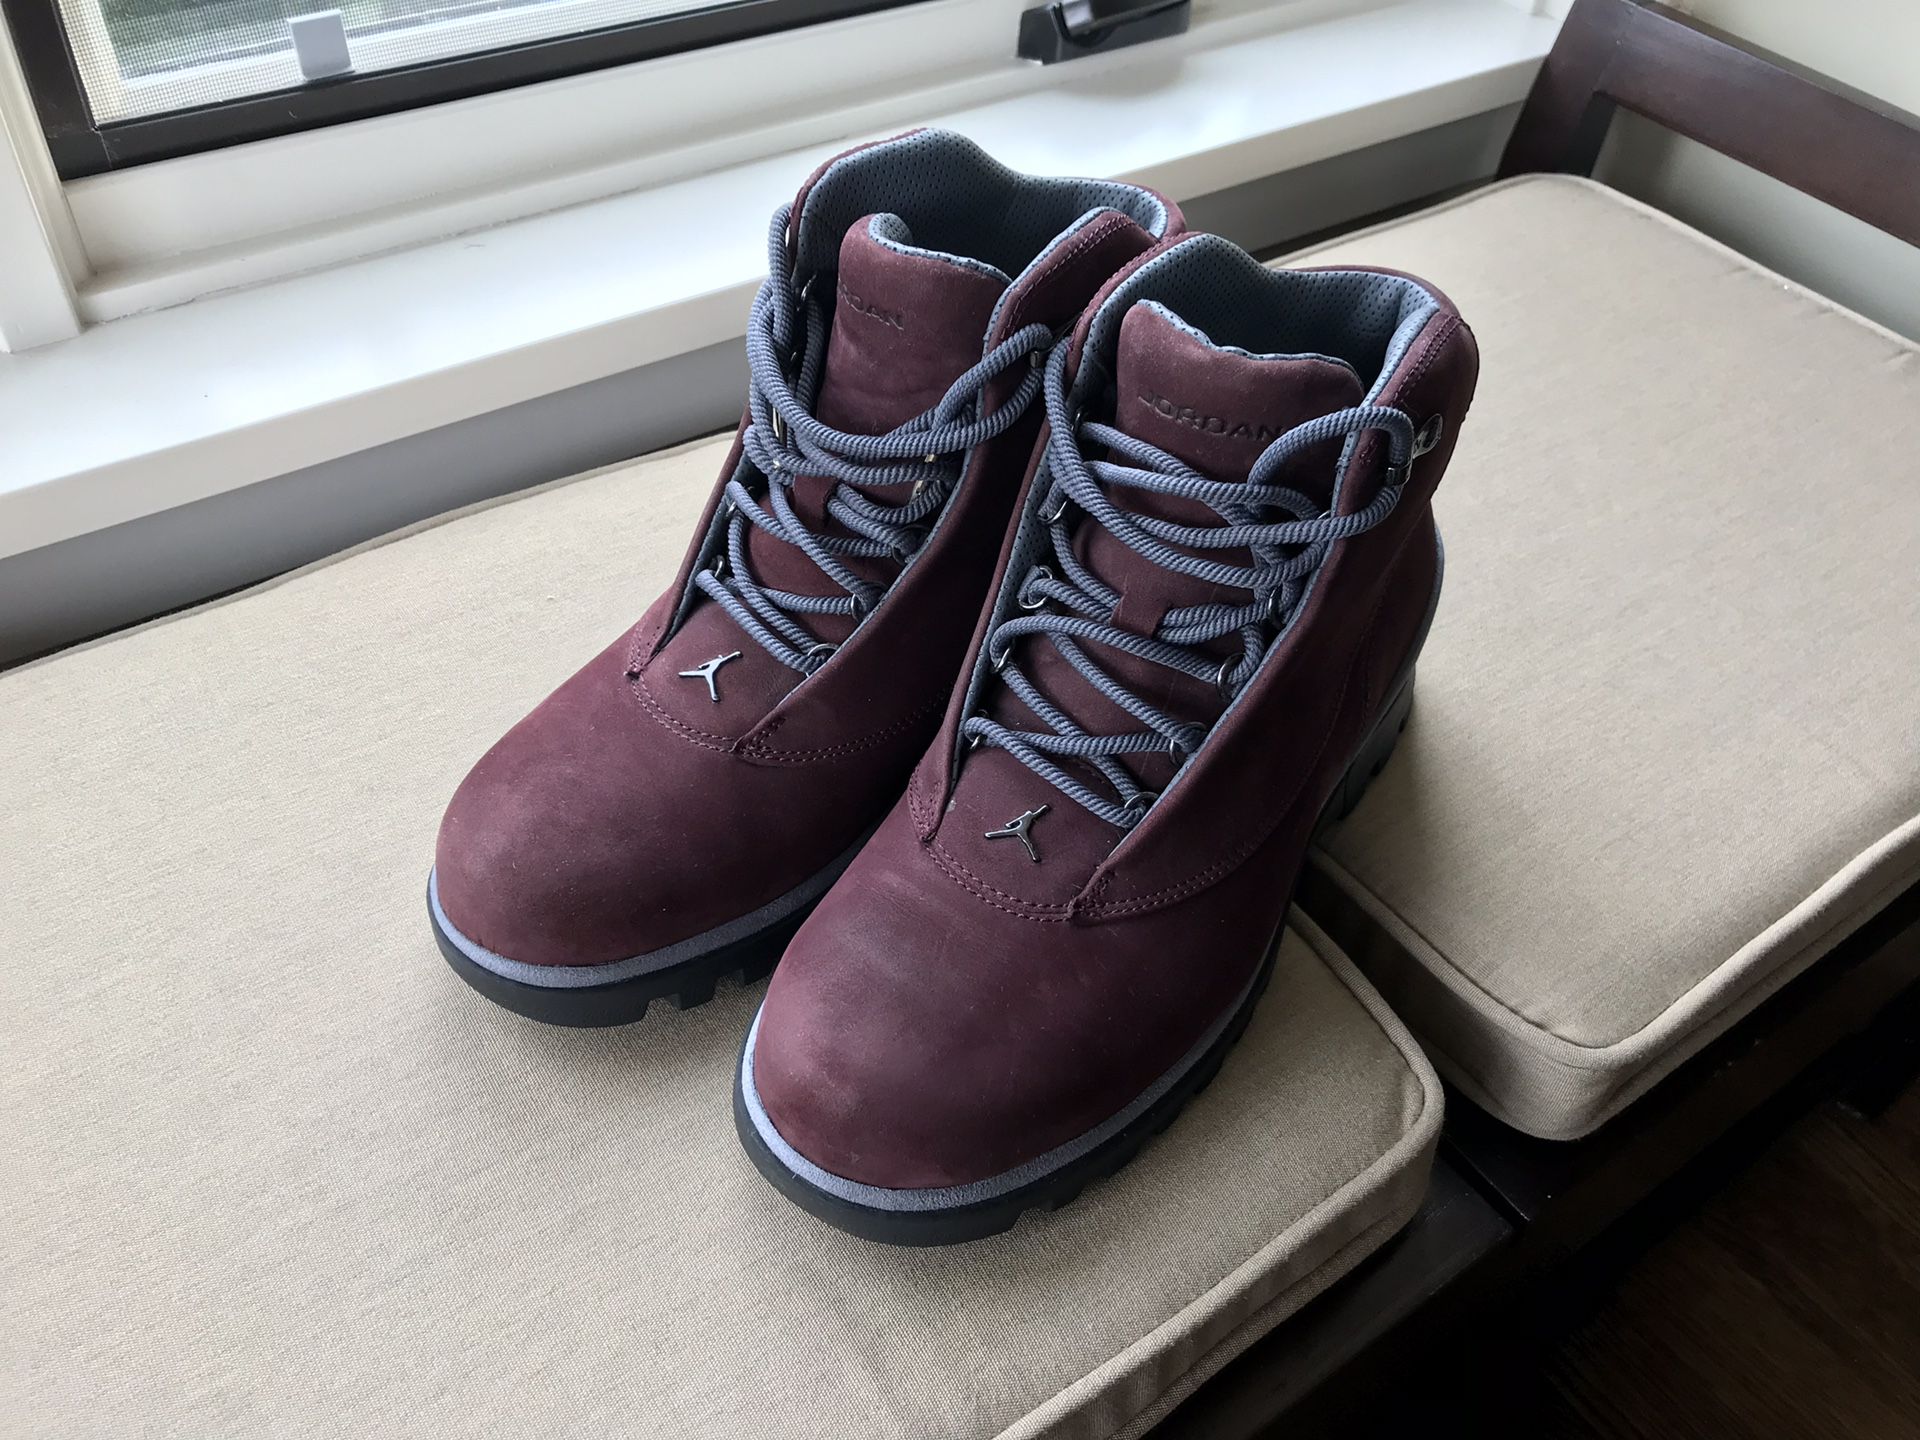 Jordan DS 2 Clean Boots model# 313509-601